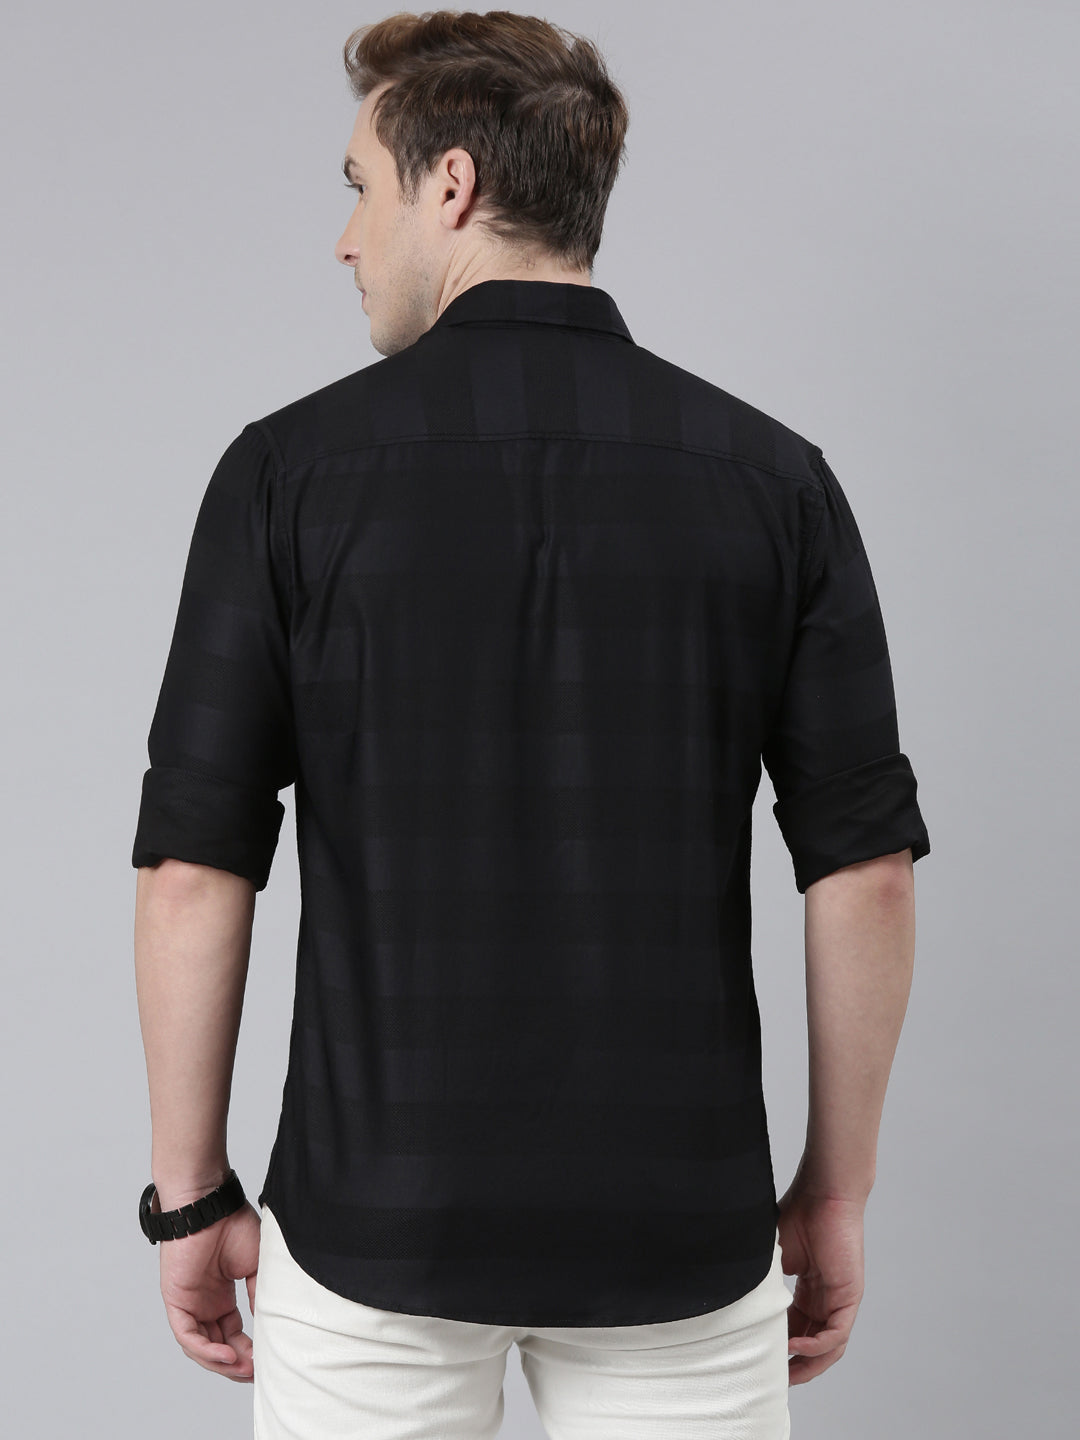 Black Solid Shirt Solid Shirt Bushirt   